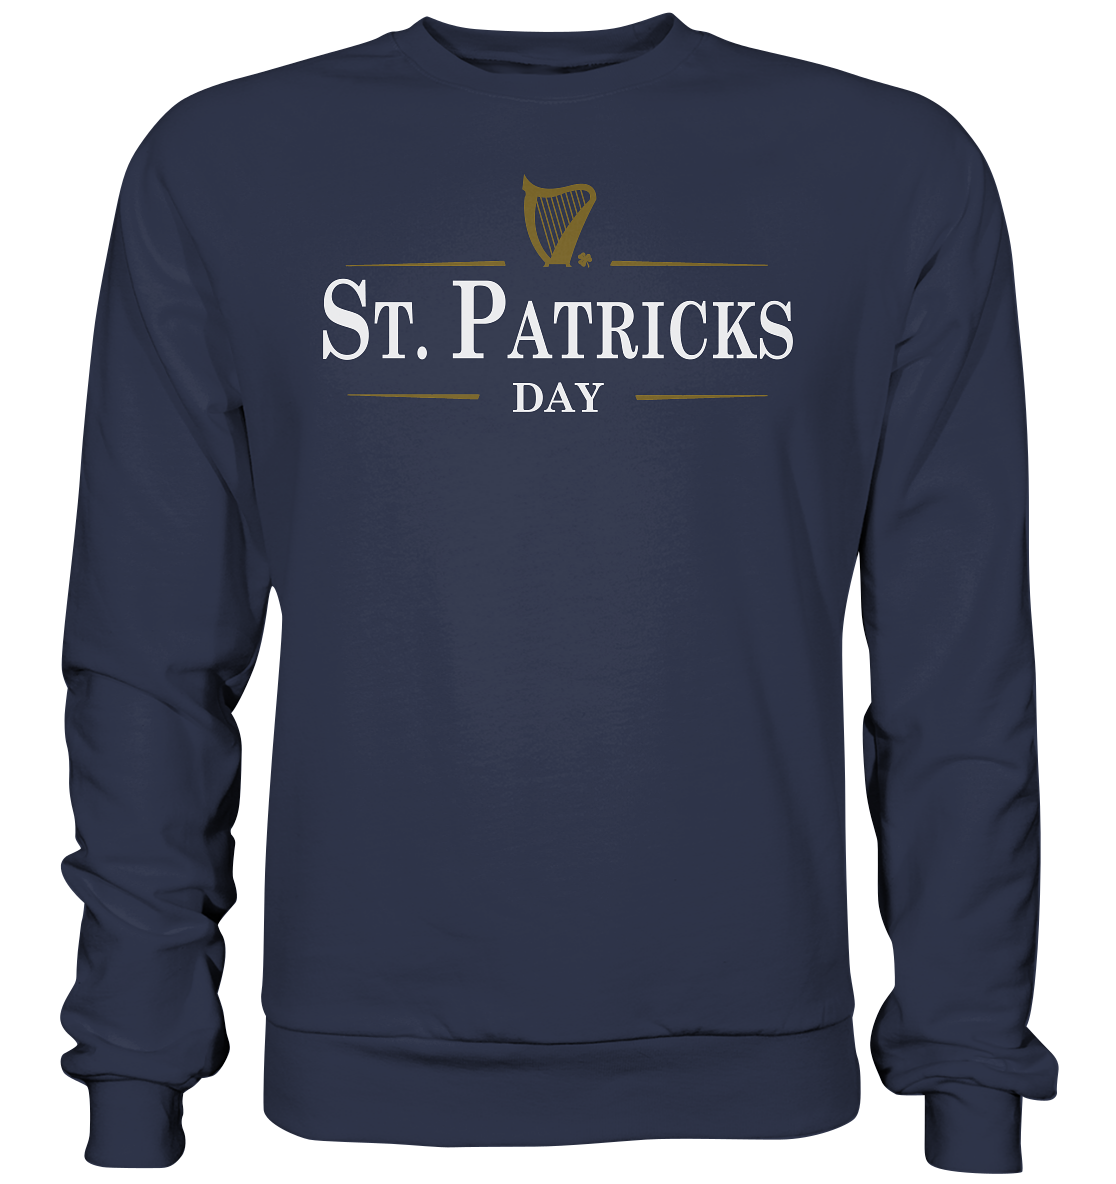 St. Patricks Day "Stout" - Premium Sweatshirt